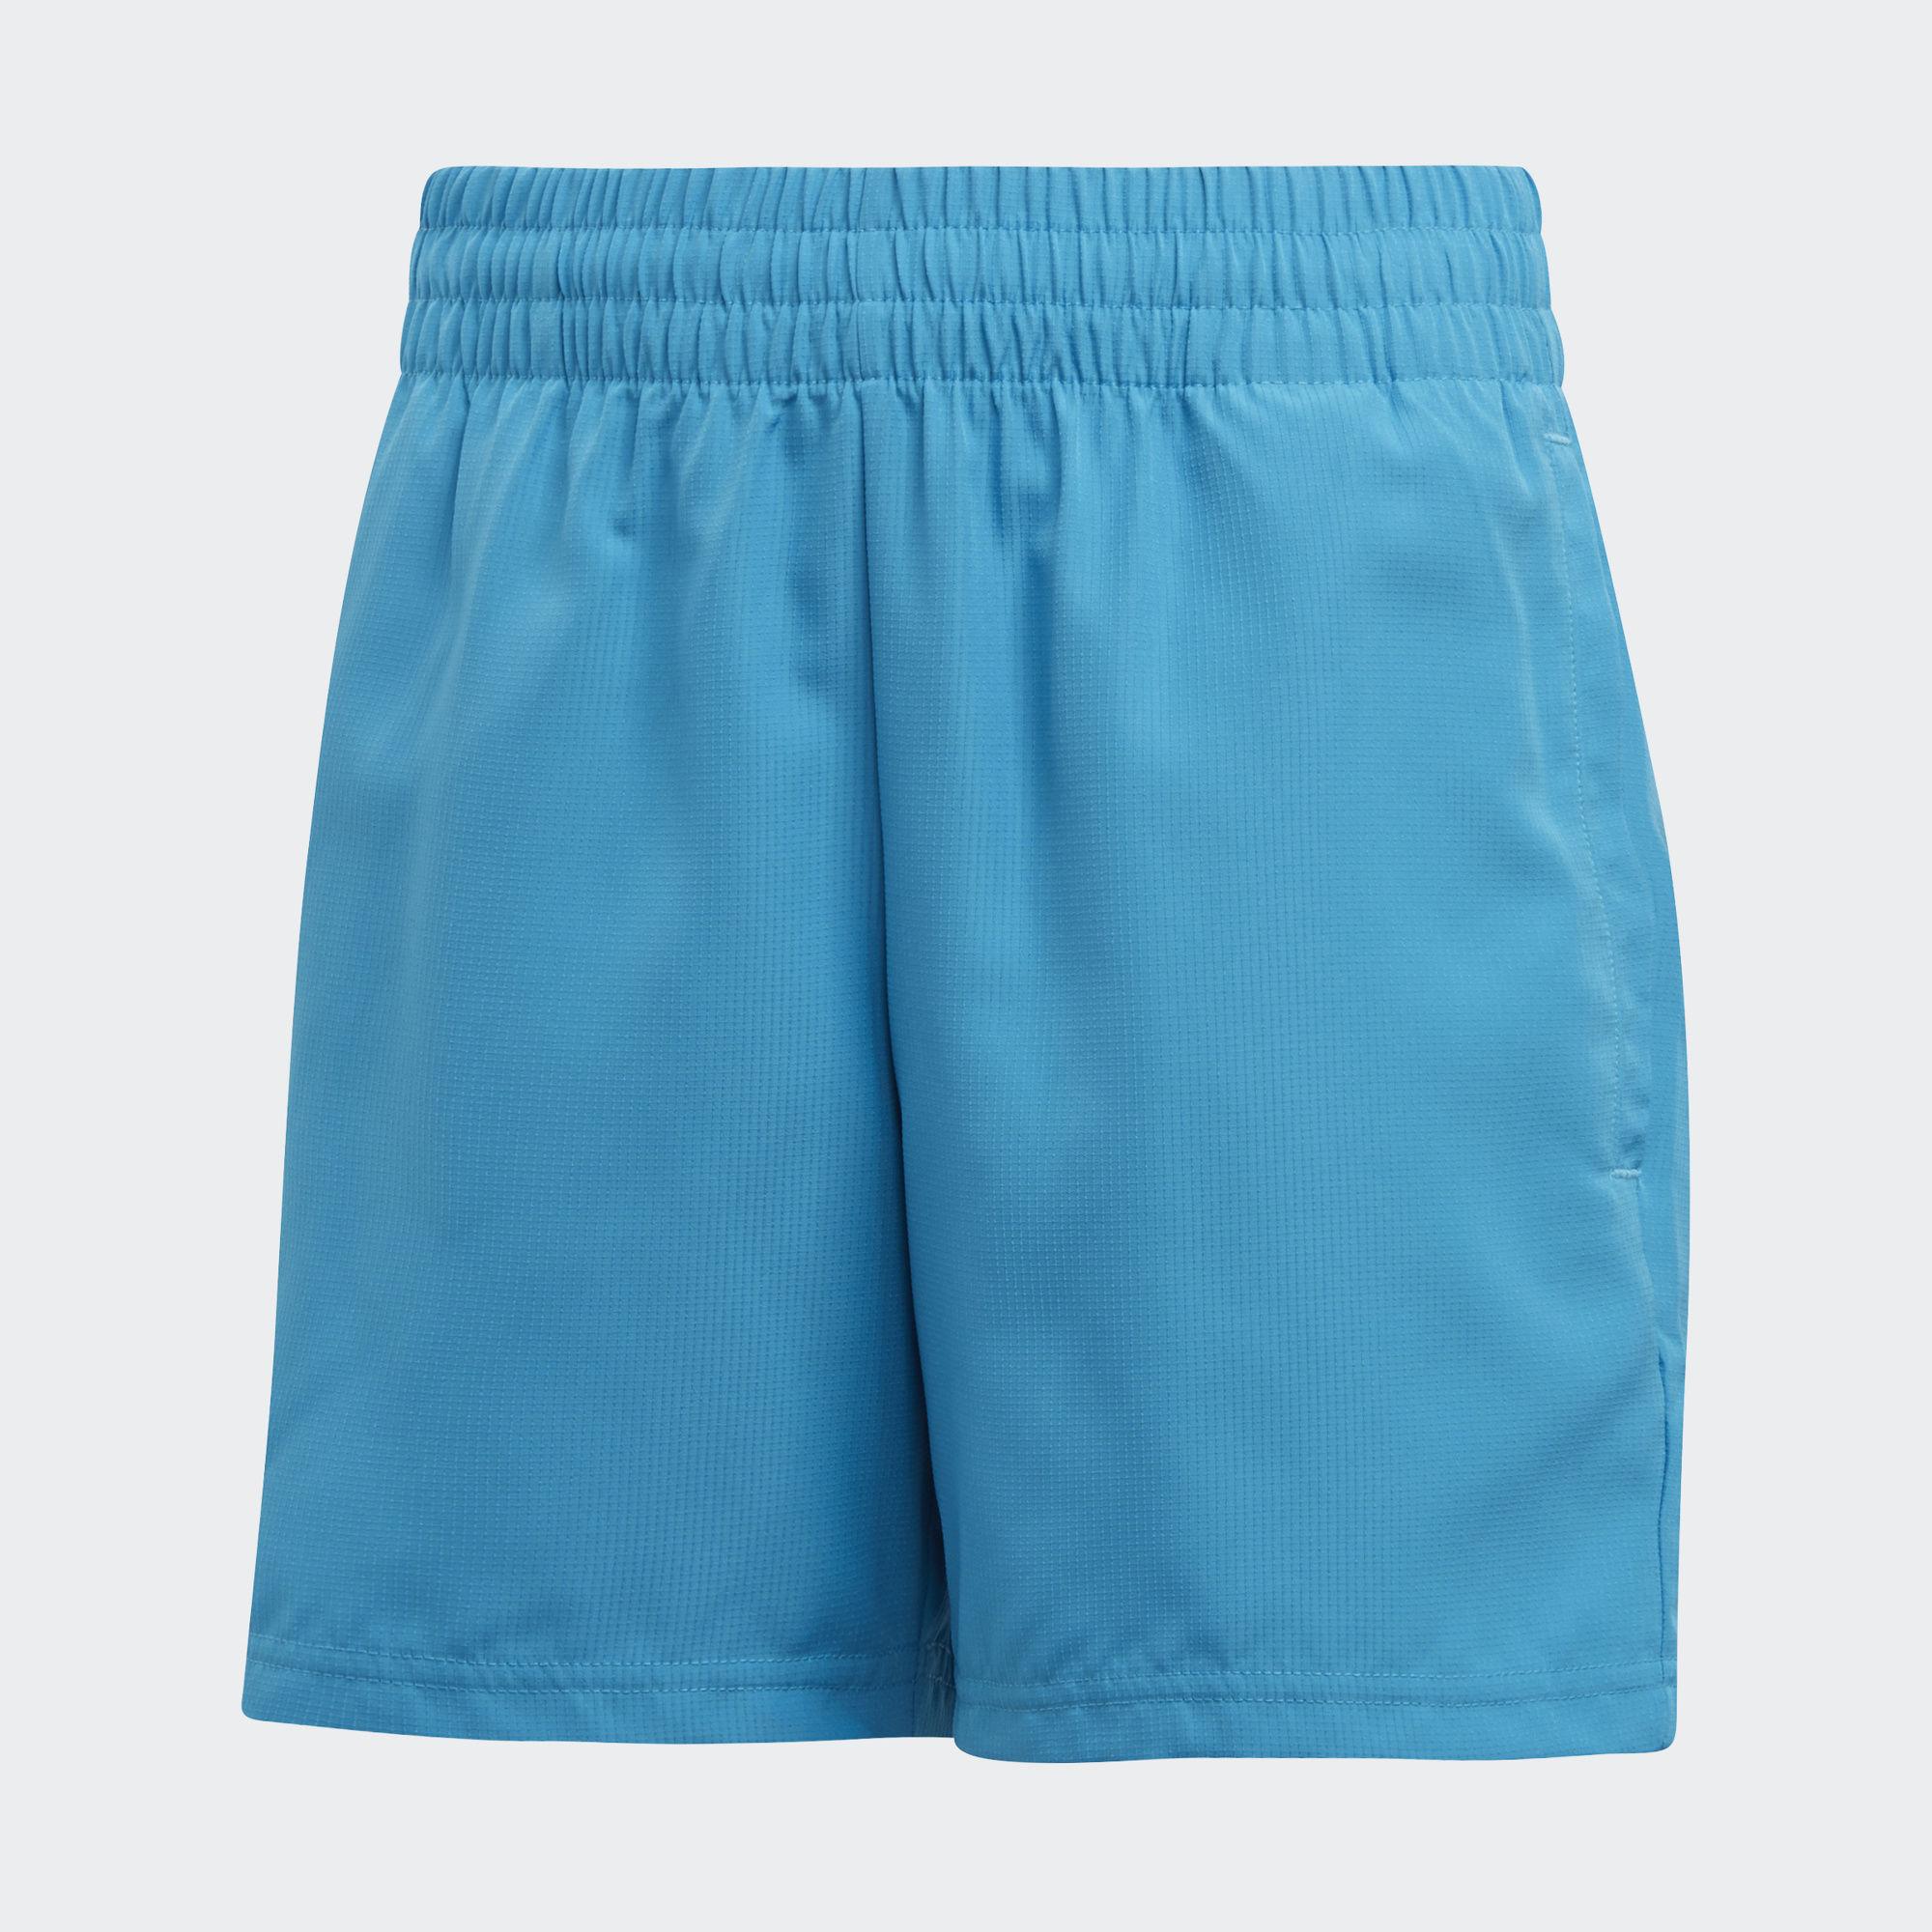 Adidas Boys Club Shorts - Blue - Tennisnuts.com